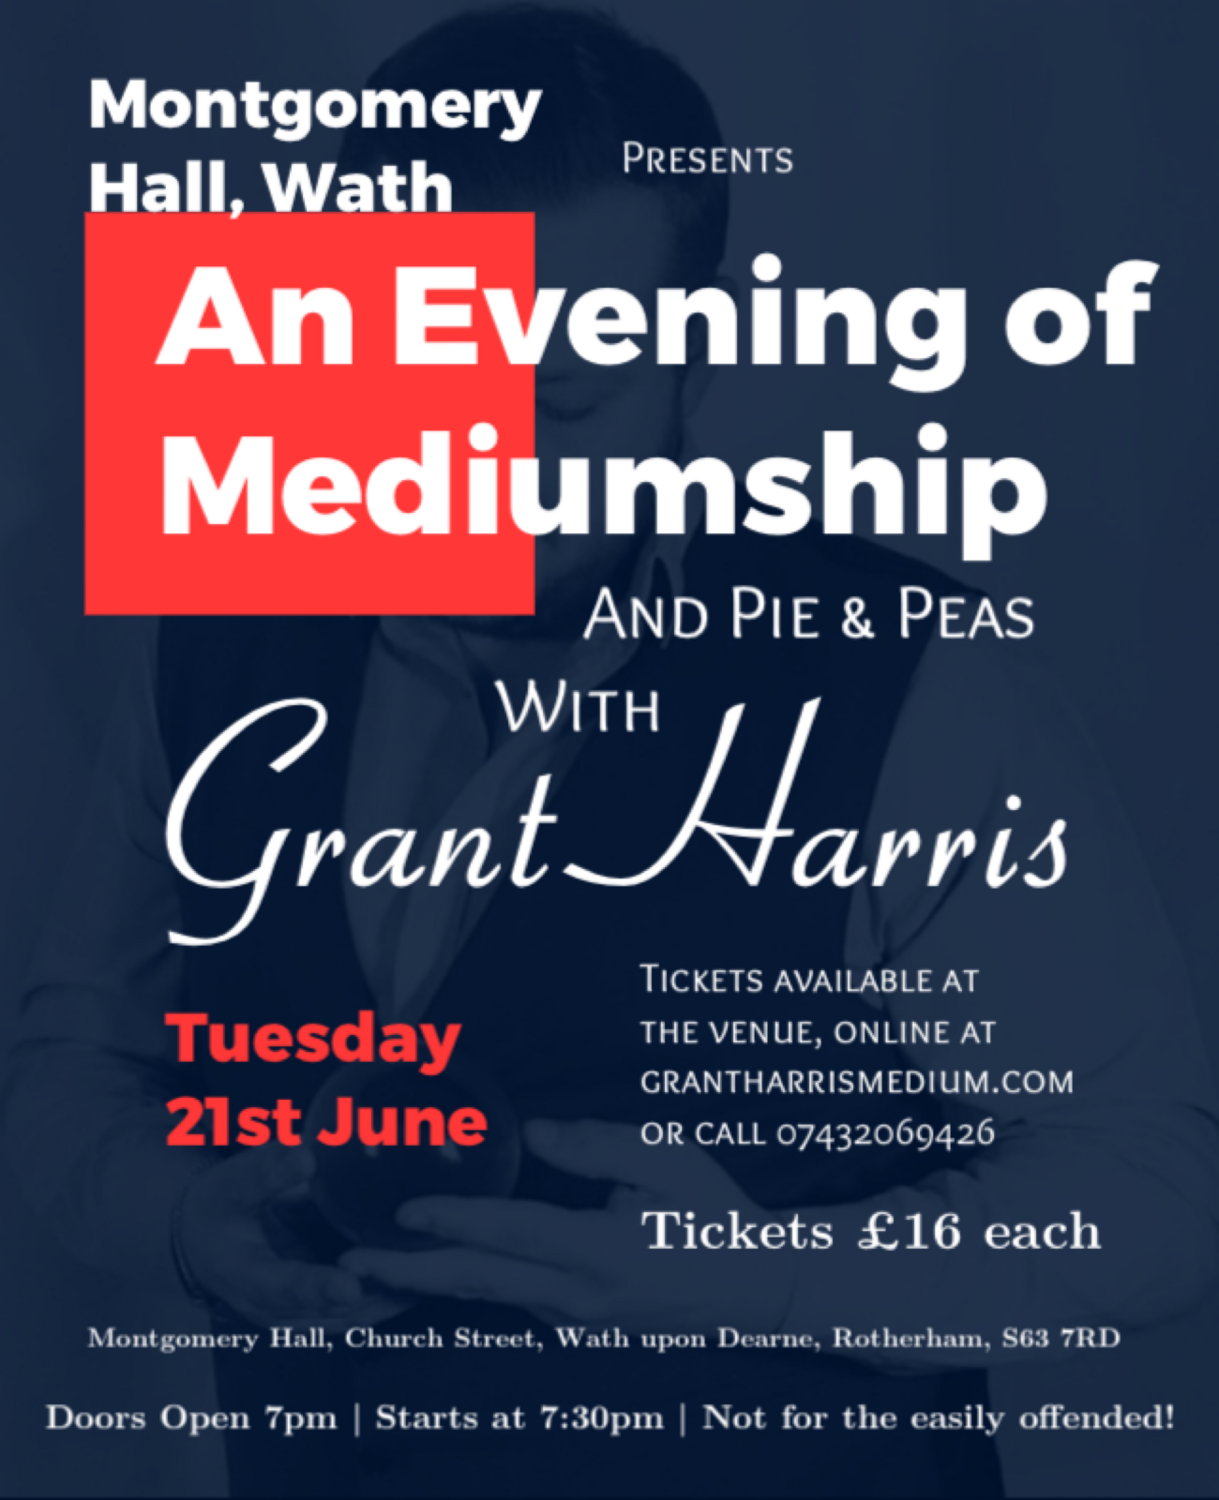 Evening of Mediumship with Pie & Peas, Montgomery Hall, Wath, Tue 21st June 2022